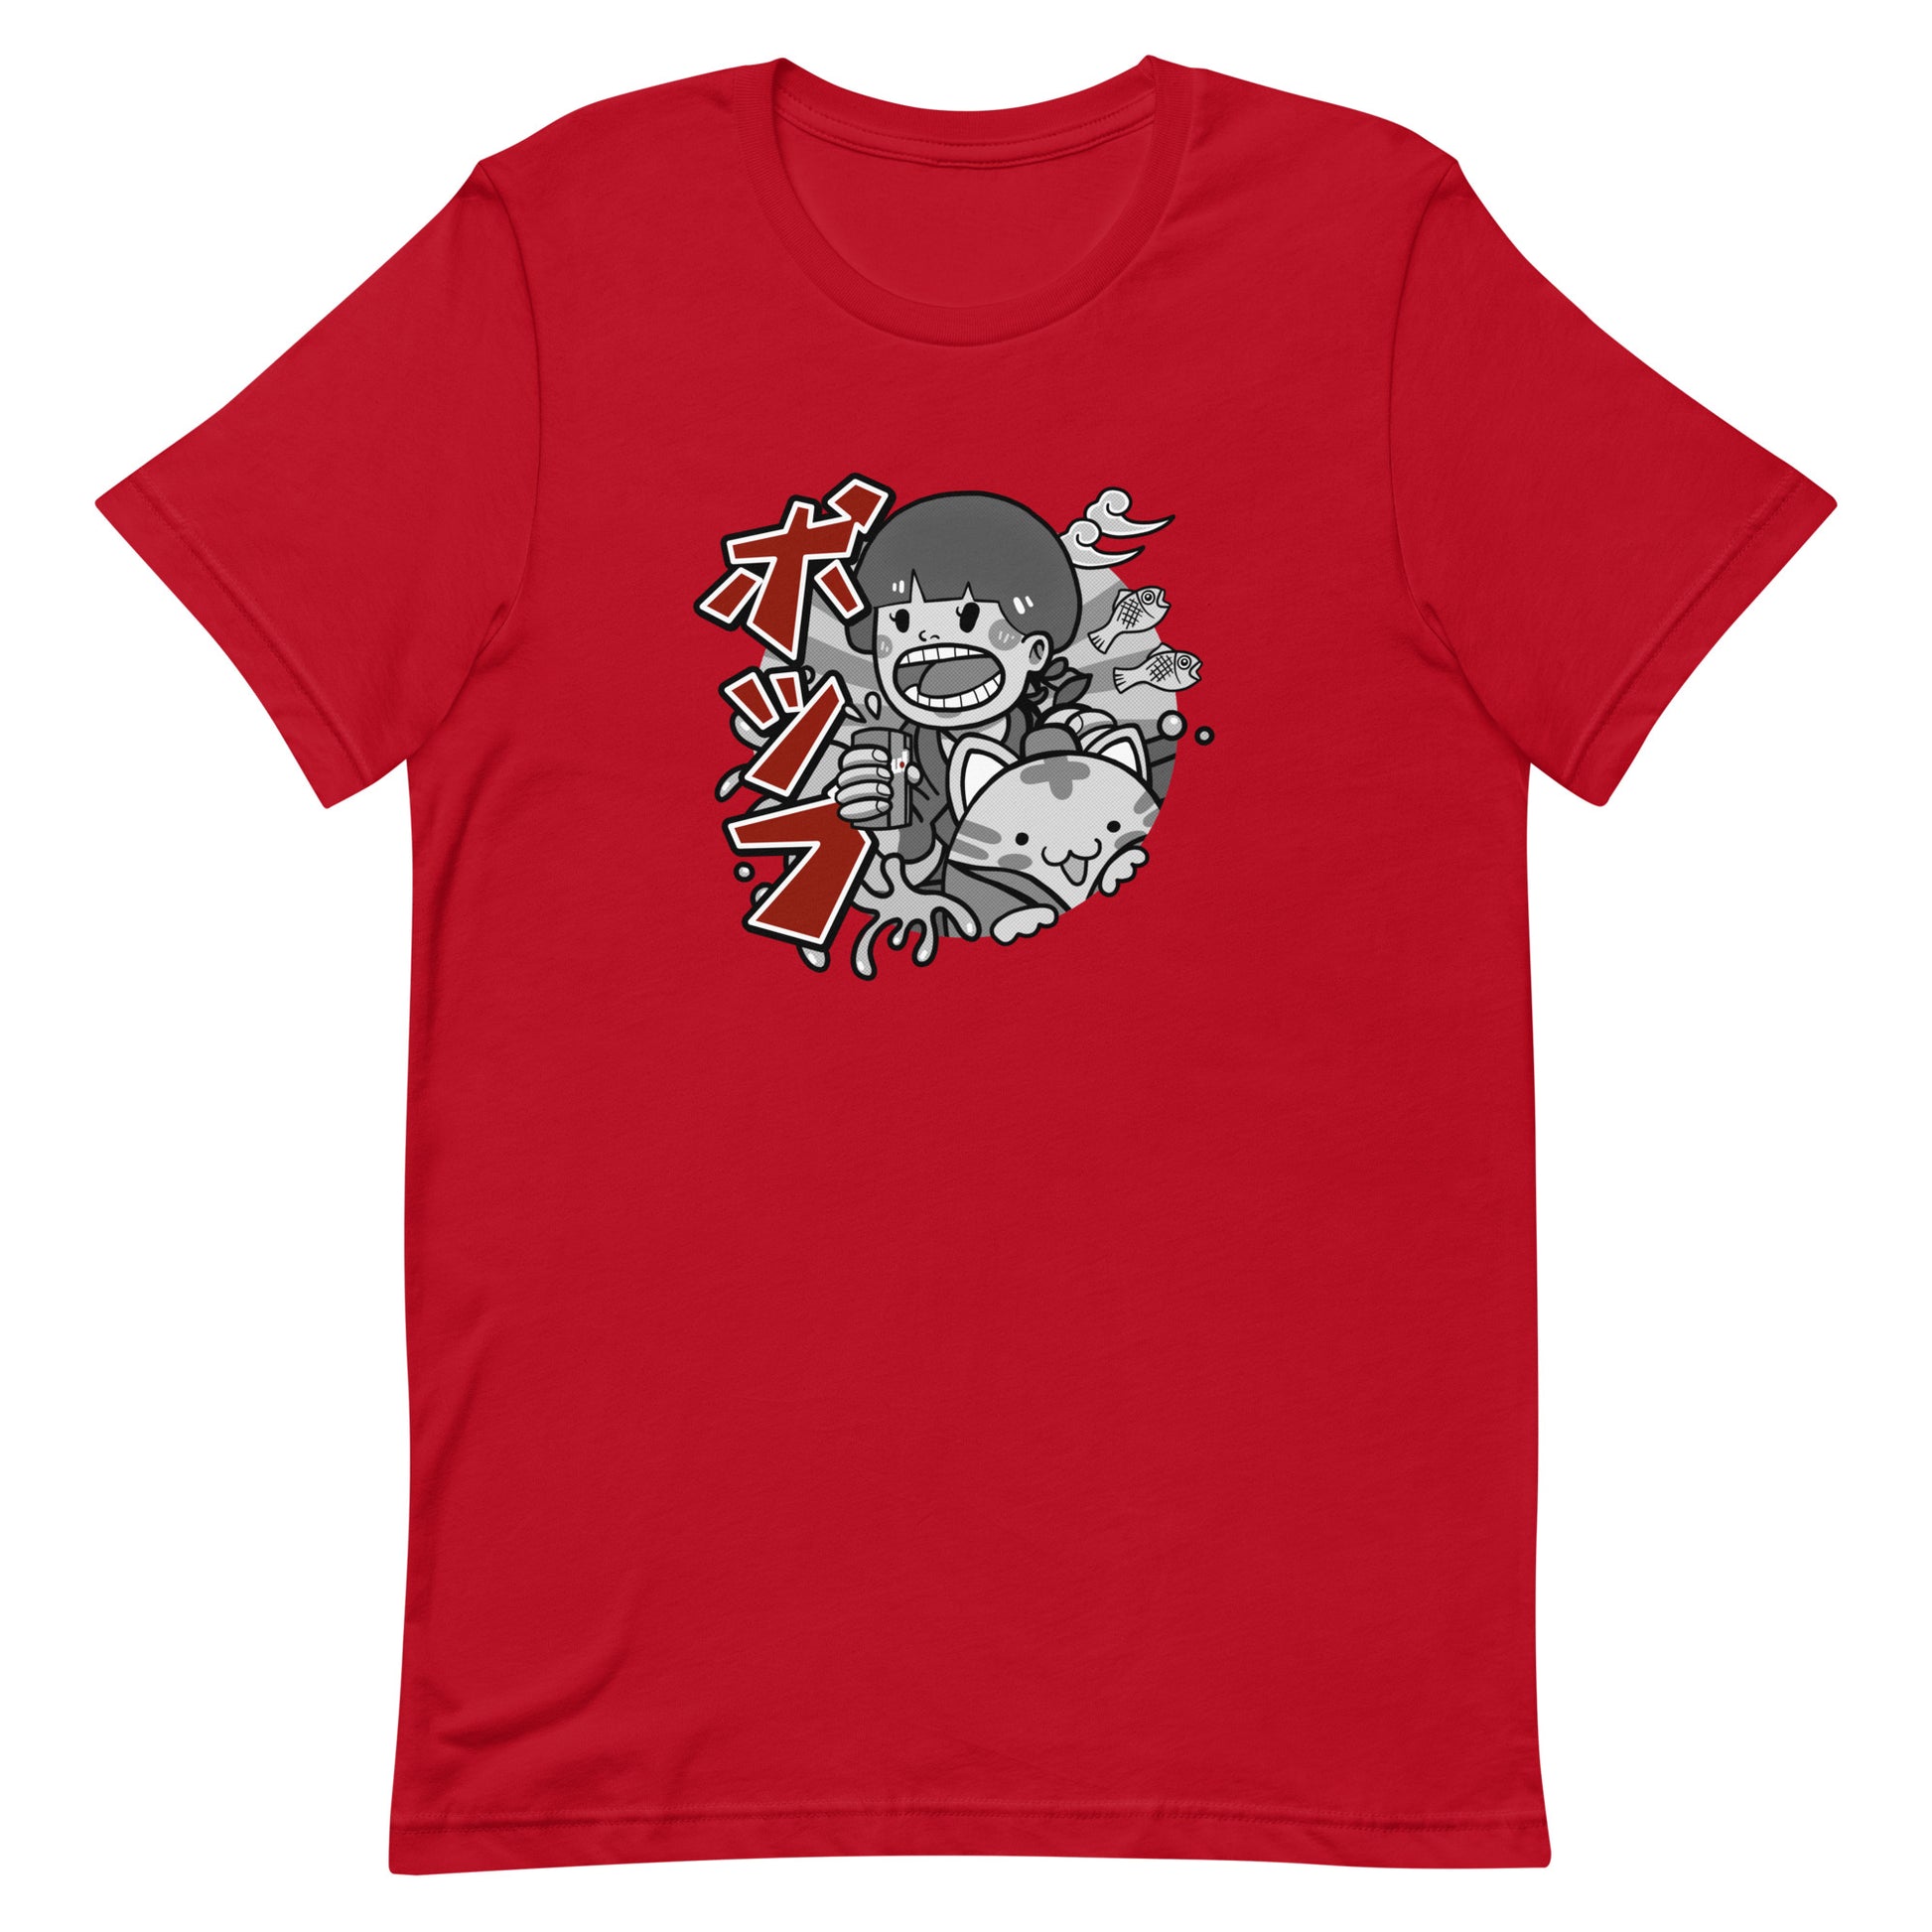 Chu-lo anime red t-shirt unisex